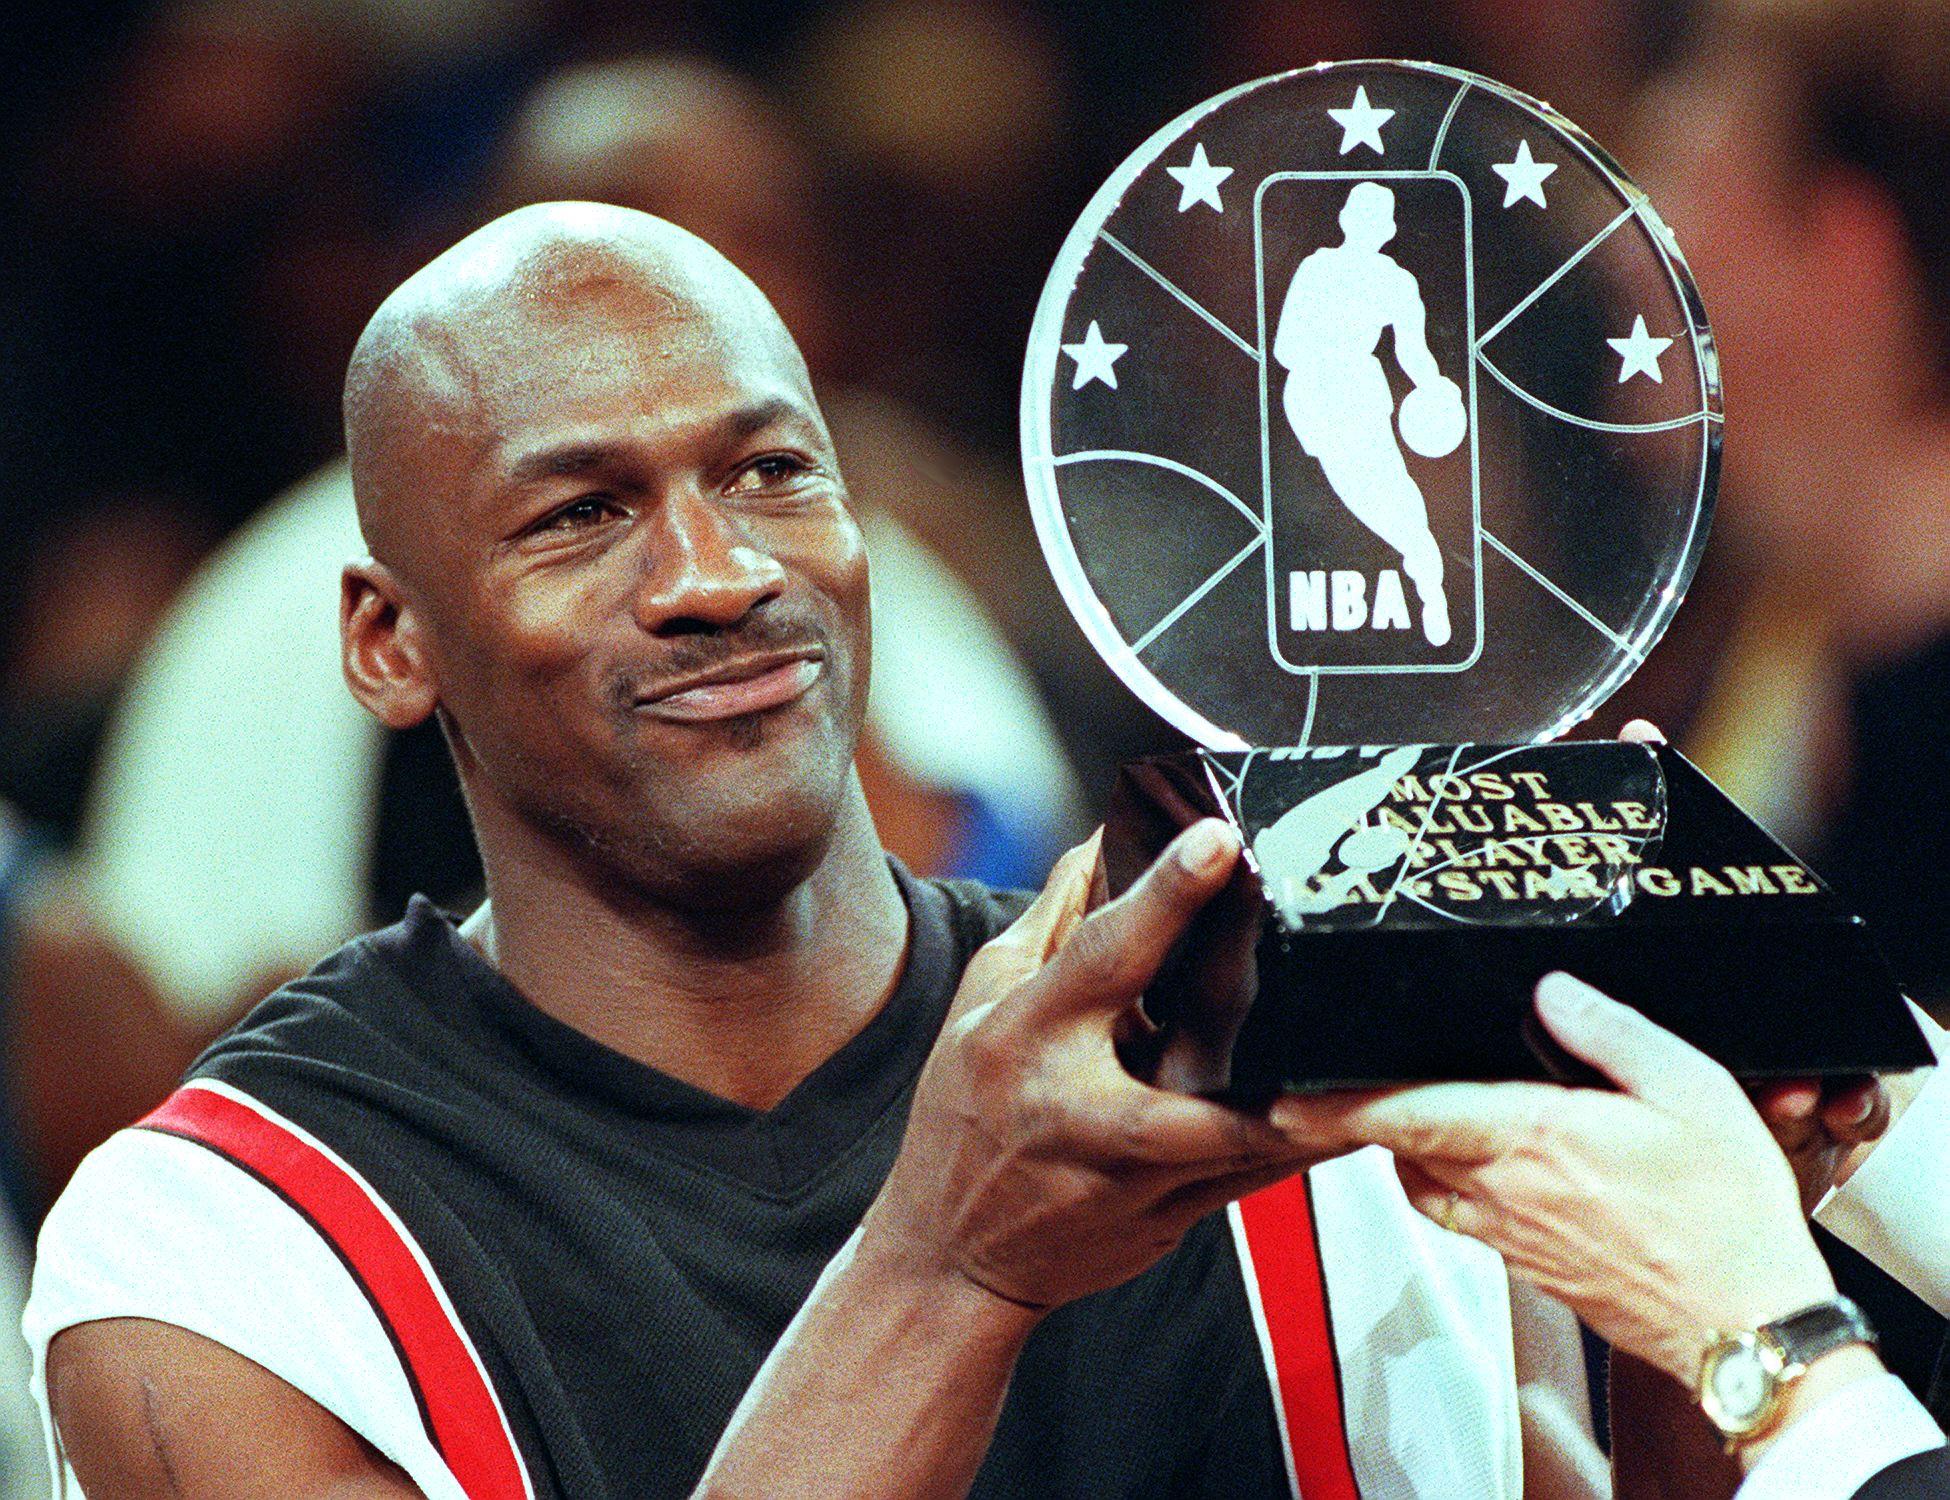 Michael Jordan's worth $3.5B, the richest basketball player ever